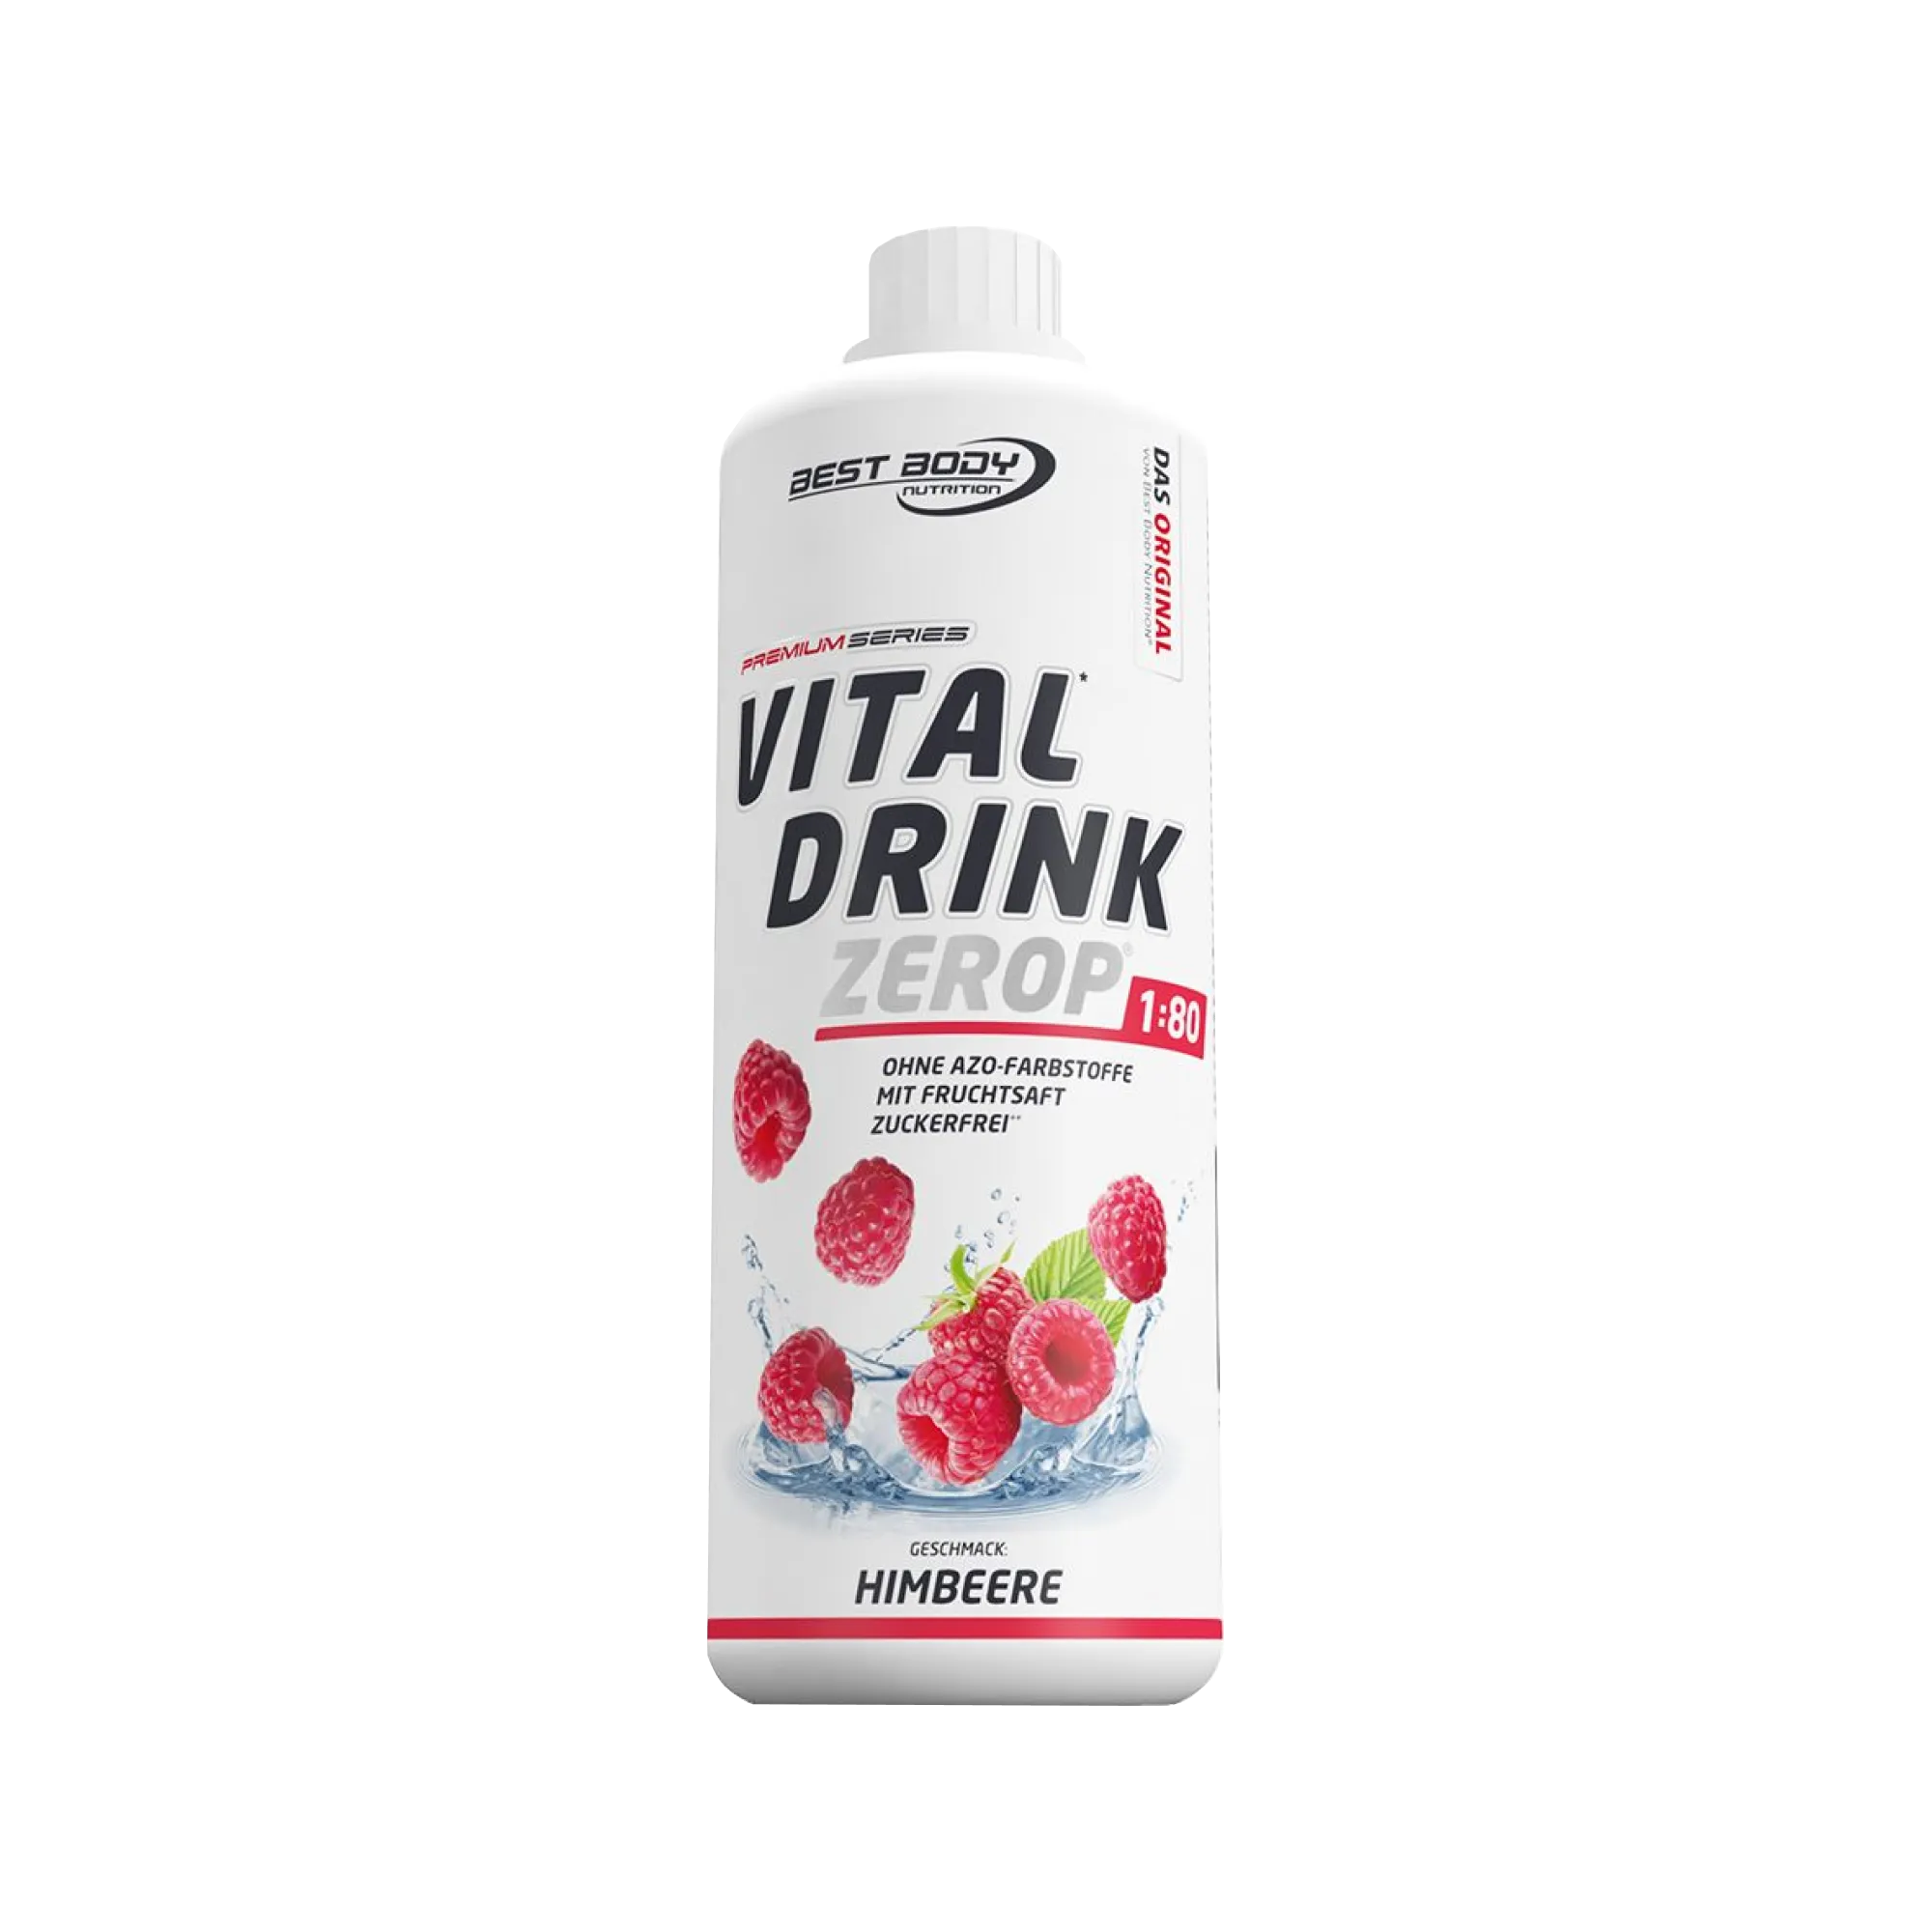 Vital Drink Zerop -  - Lampone - 1000 Ml (200 Dosi)